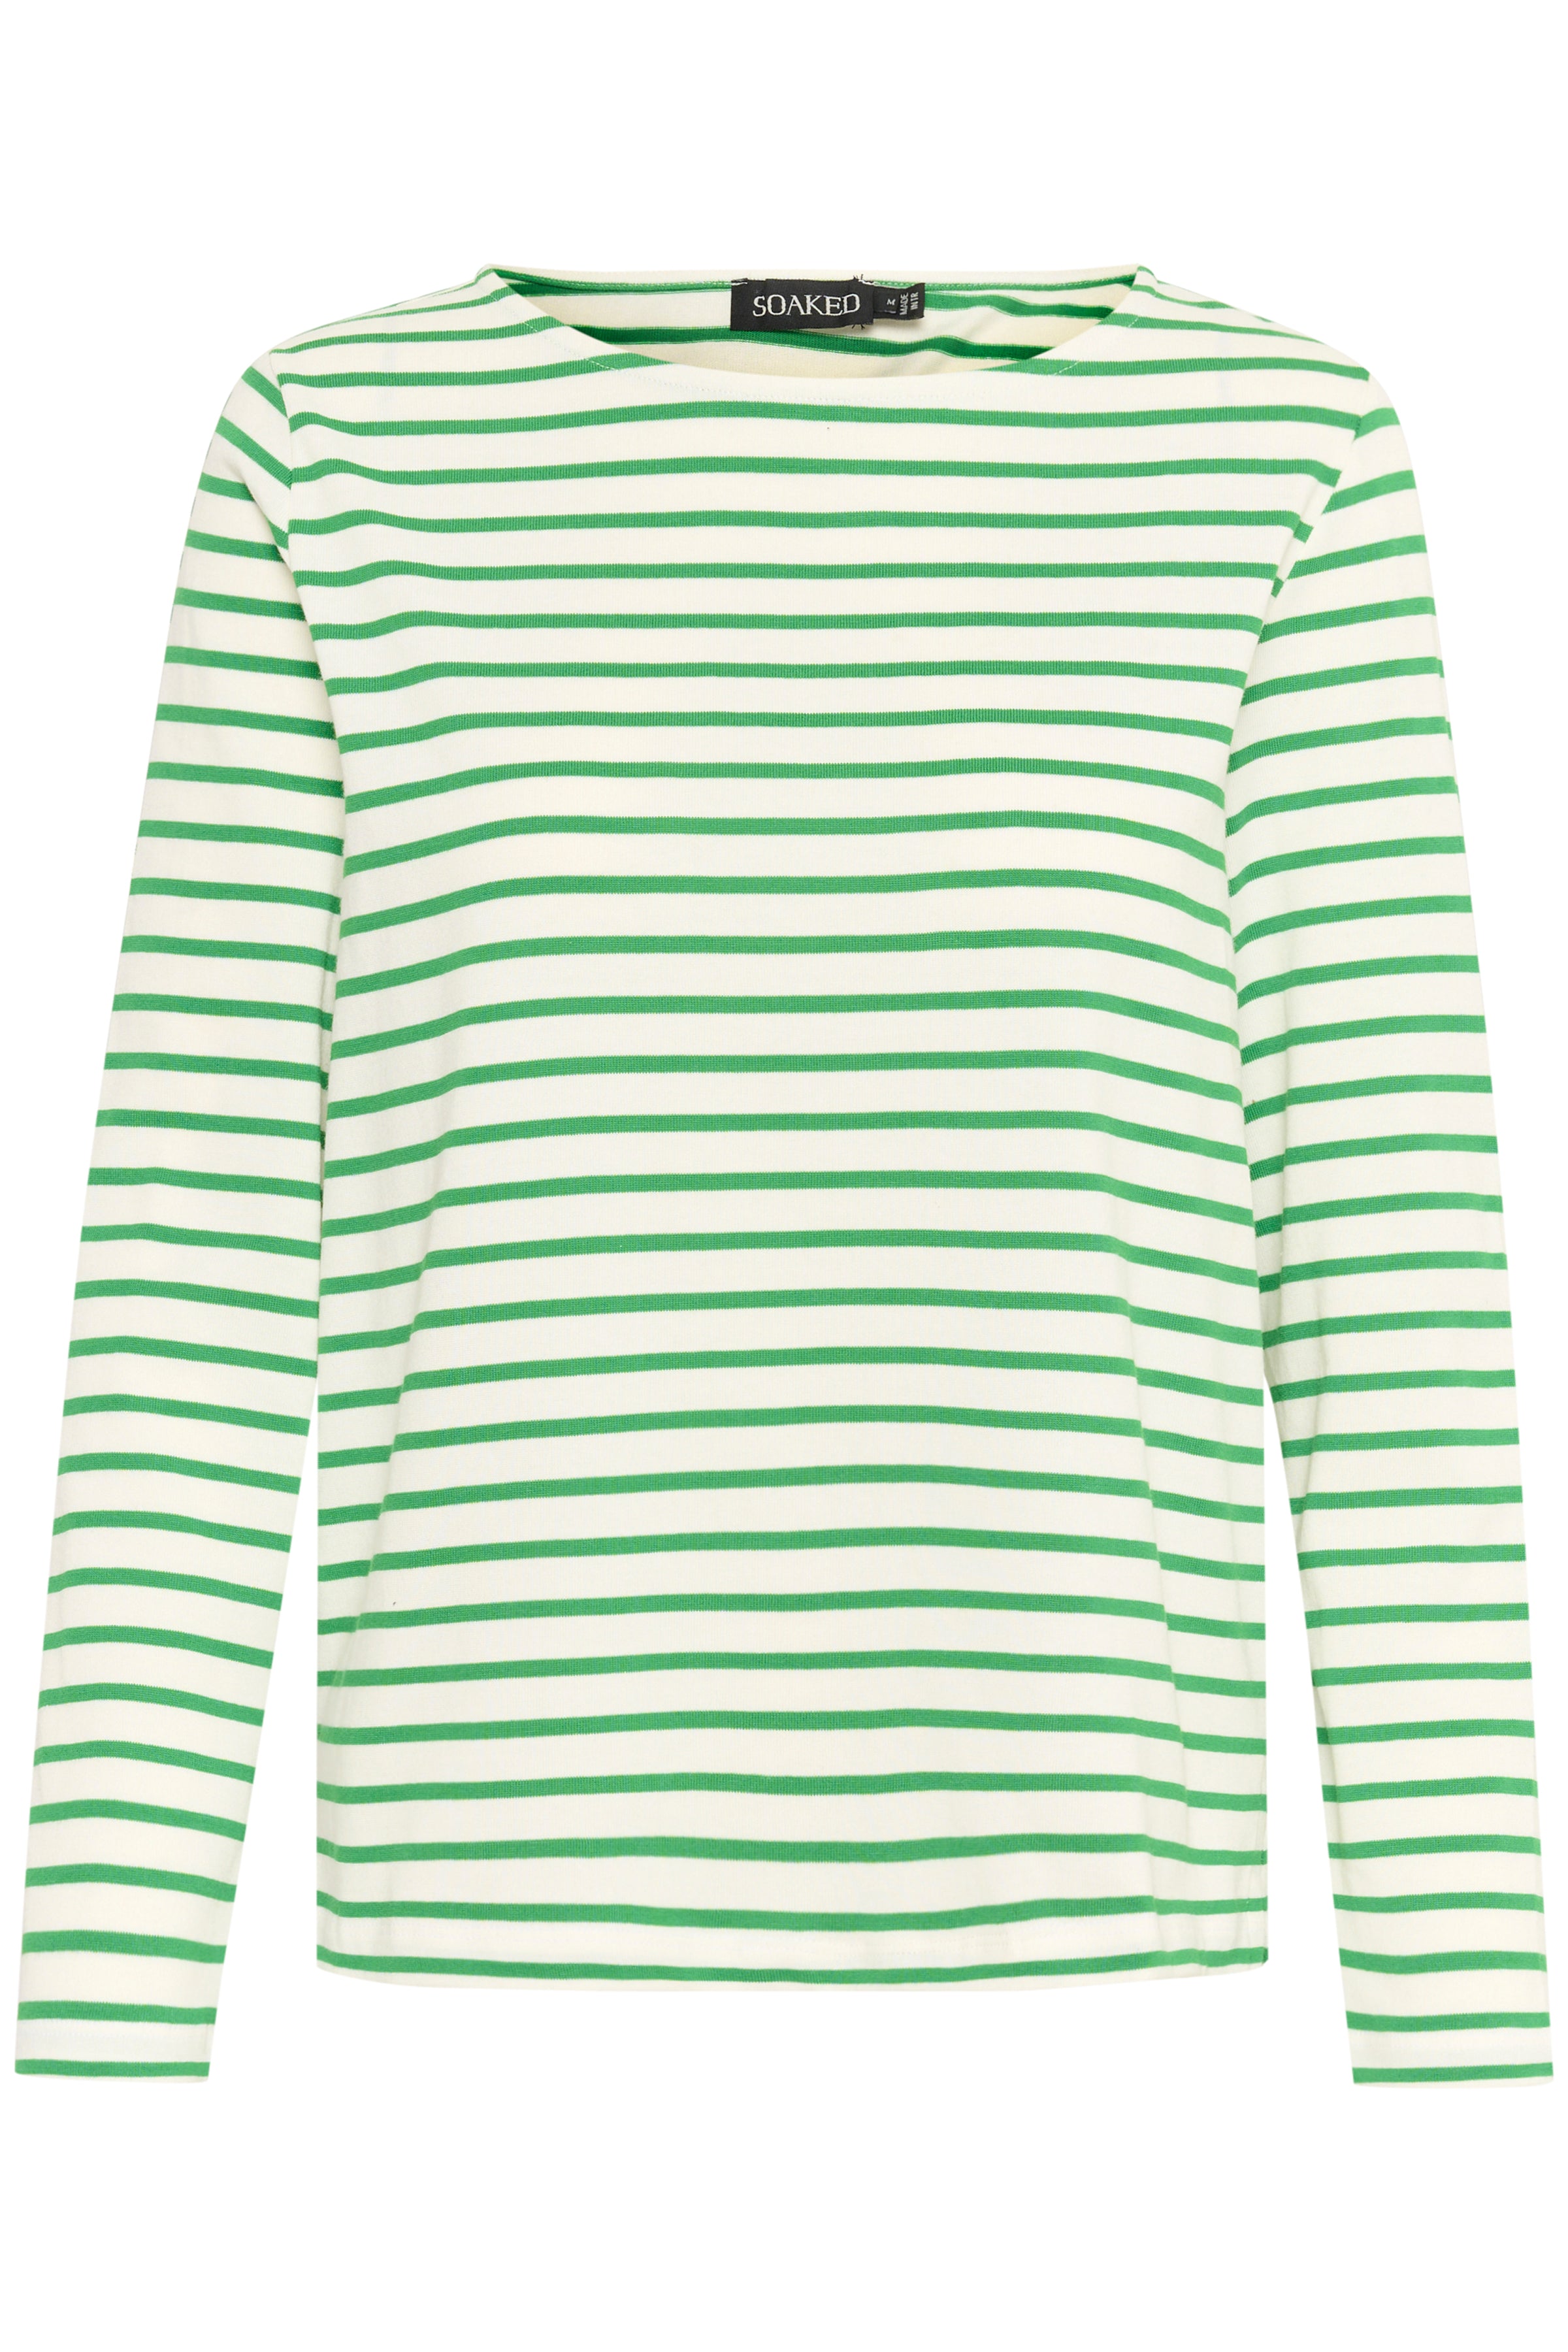 Soaked Neo Long sleeve - Green stripe